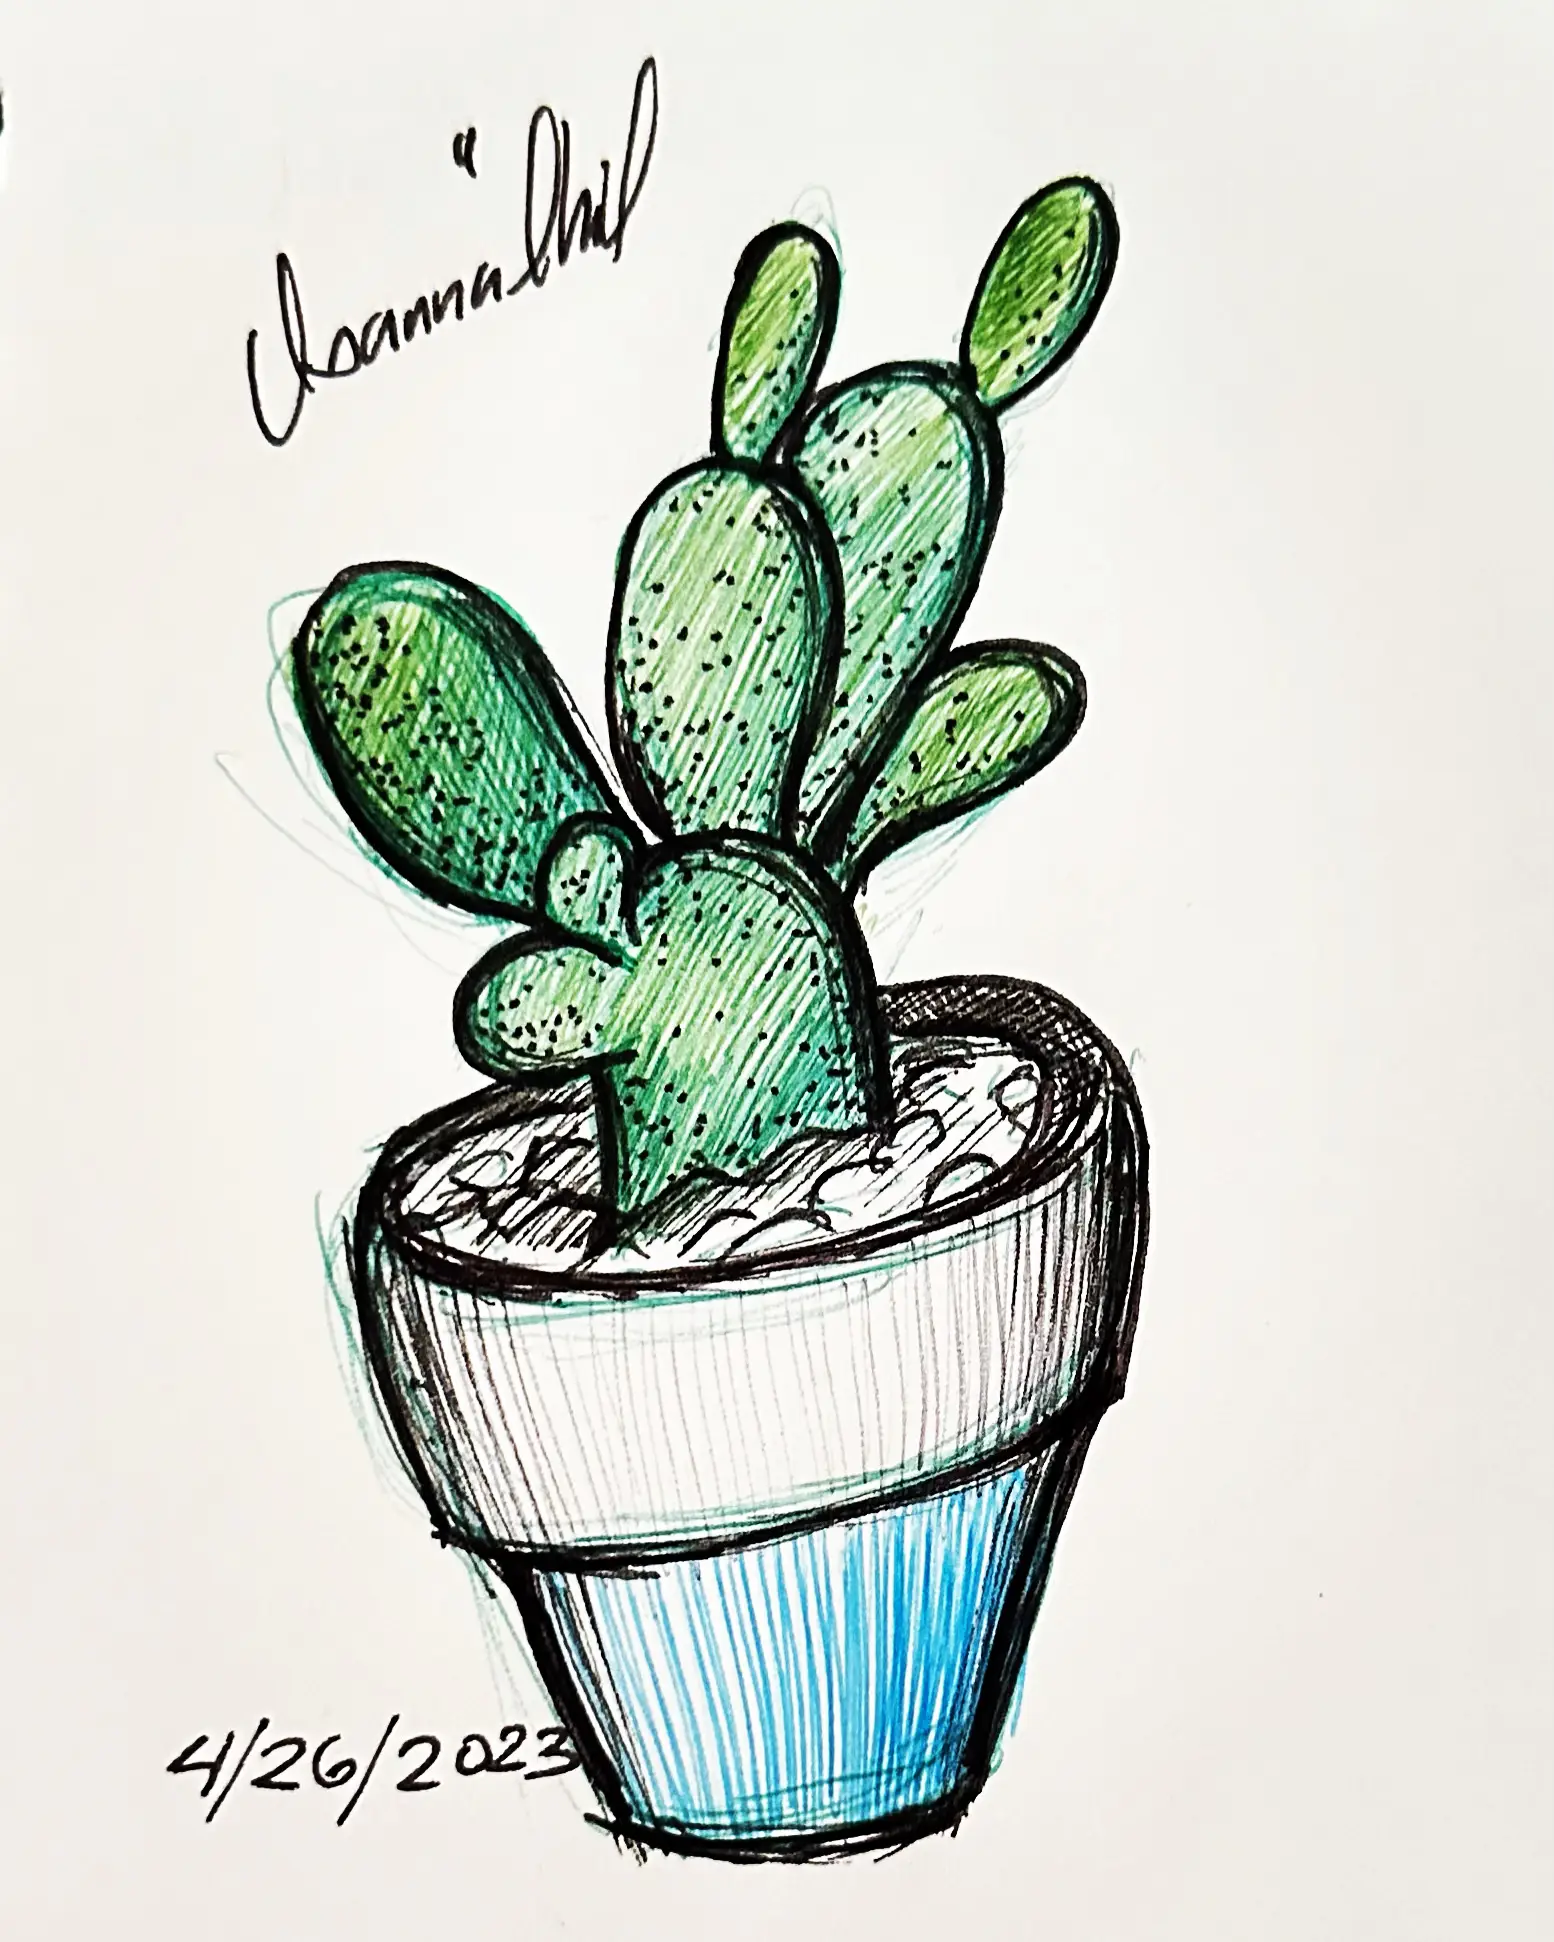 CACTUS & SUCCULENTS CUSTOMIZED SKETCHBOOK Journal - Cactus